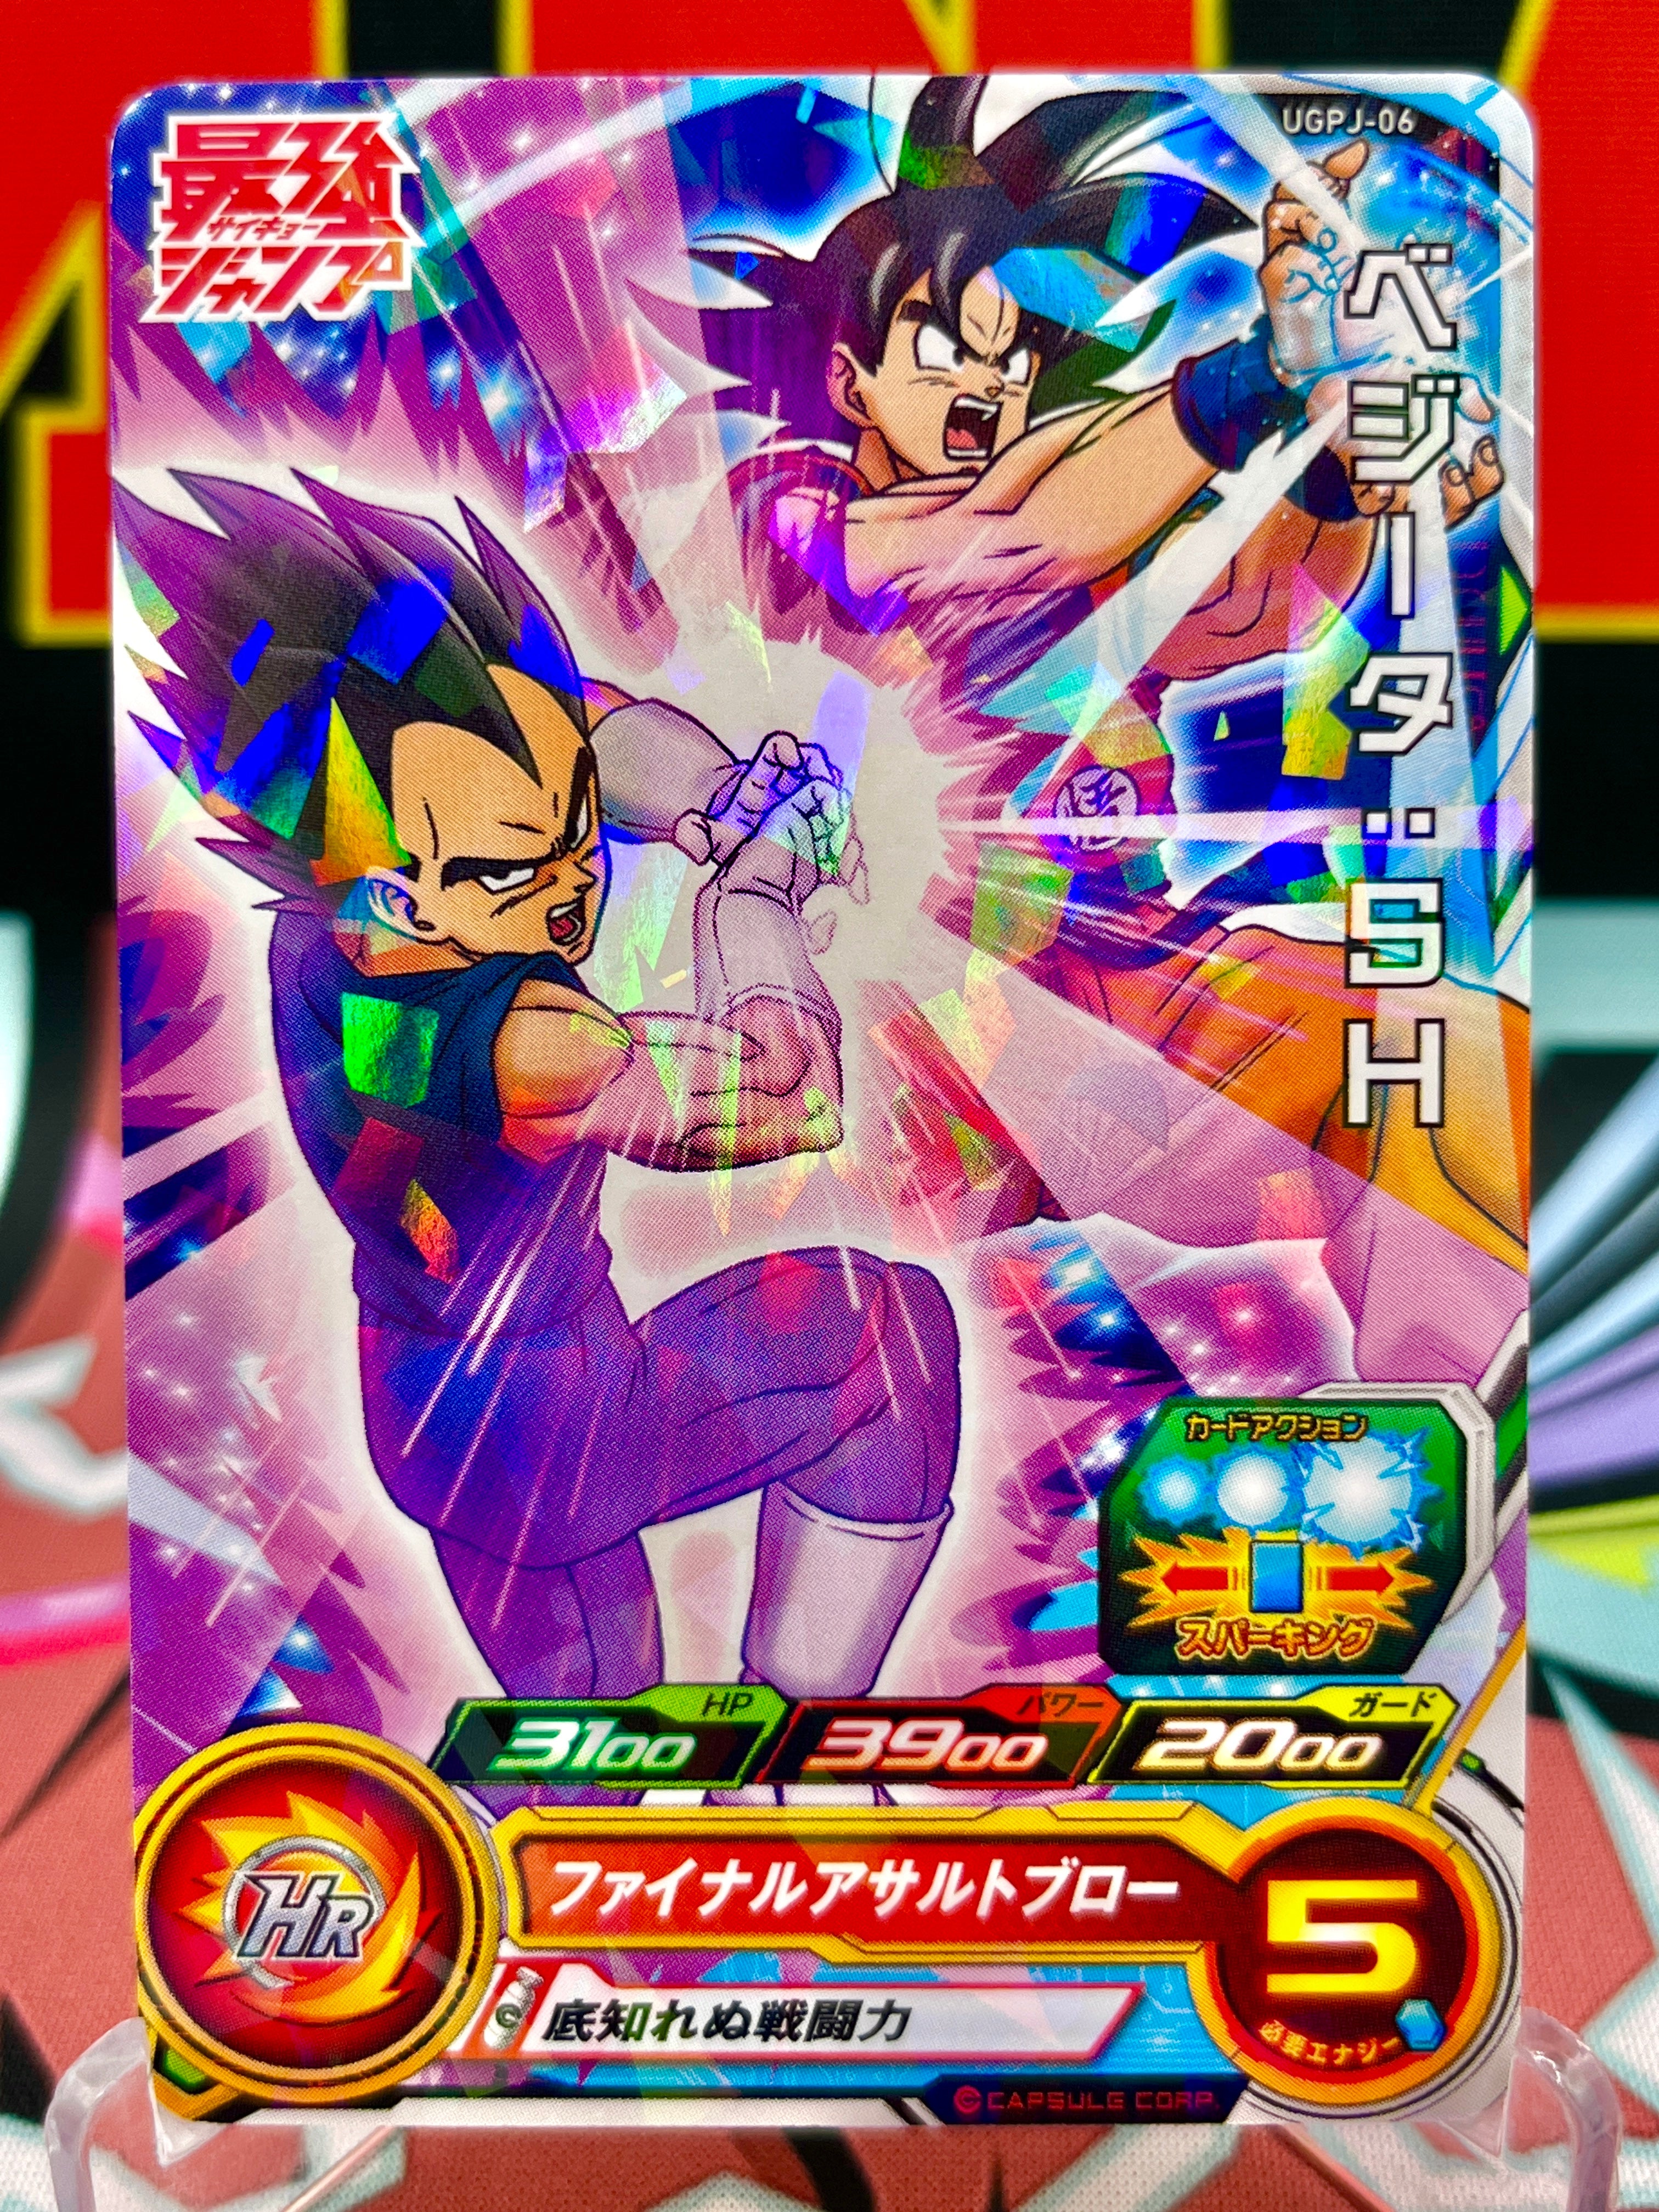 UGPJ-06 Vegeta & Goku: SH (Saikyo Jump) Promo (2022)